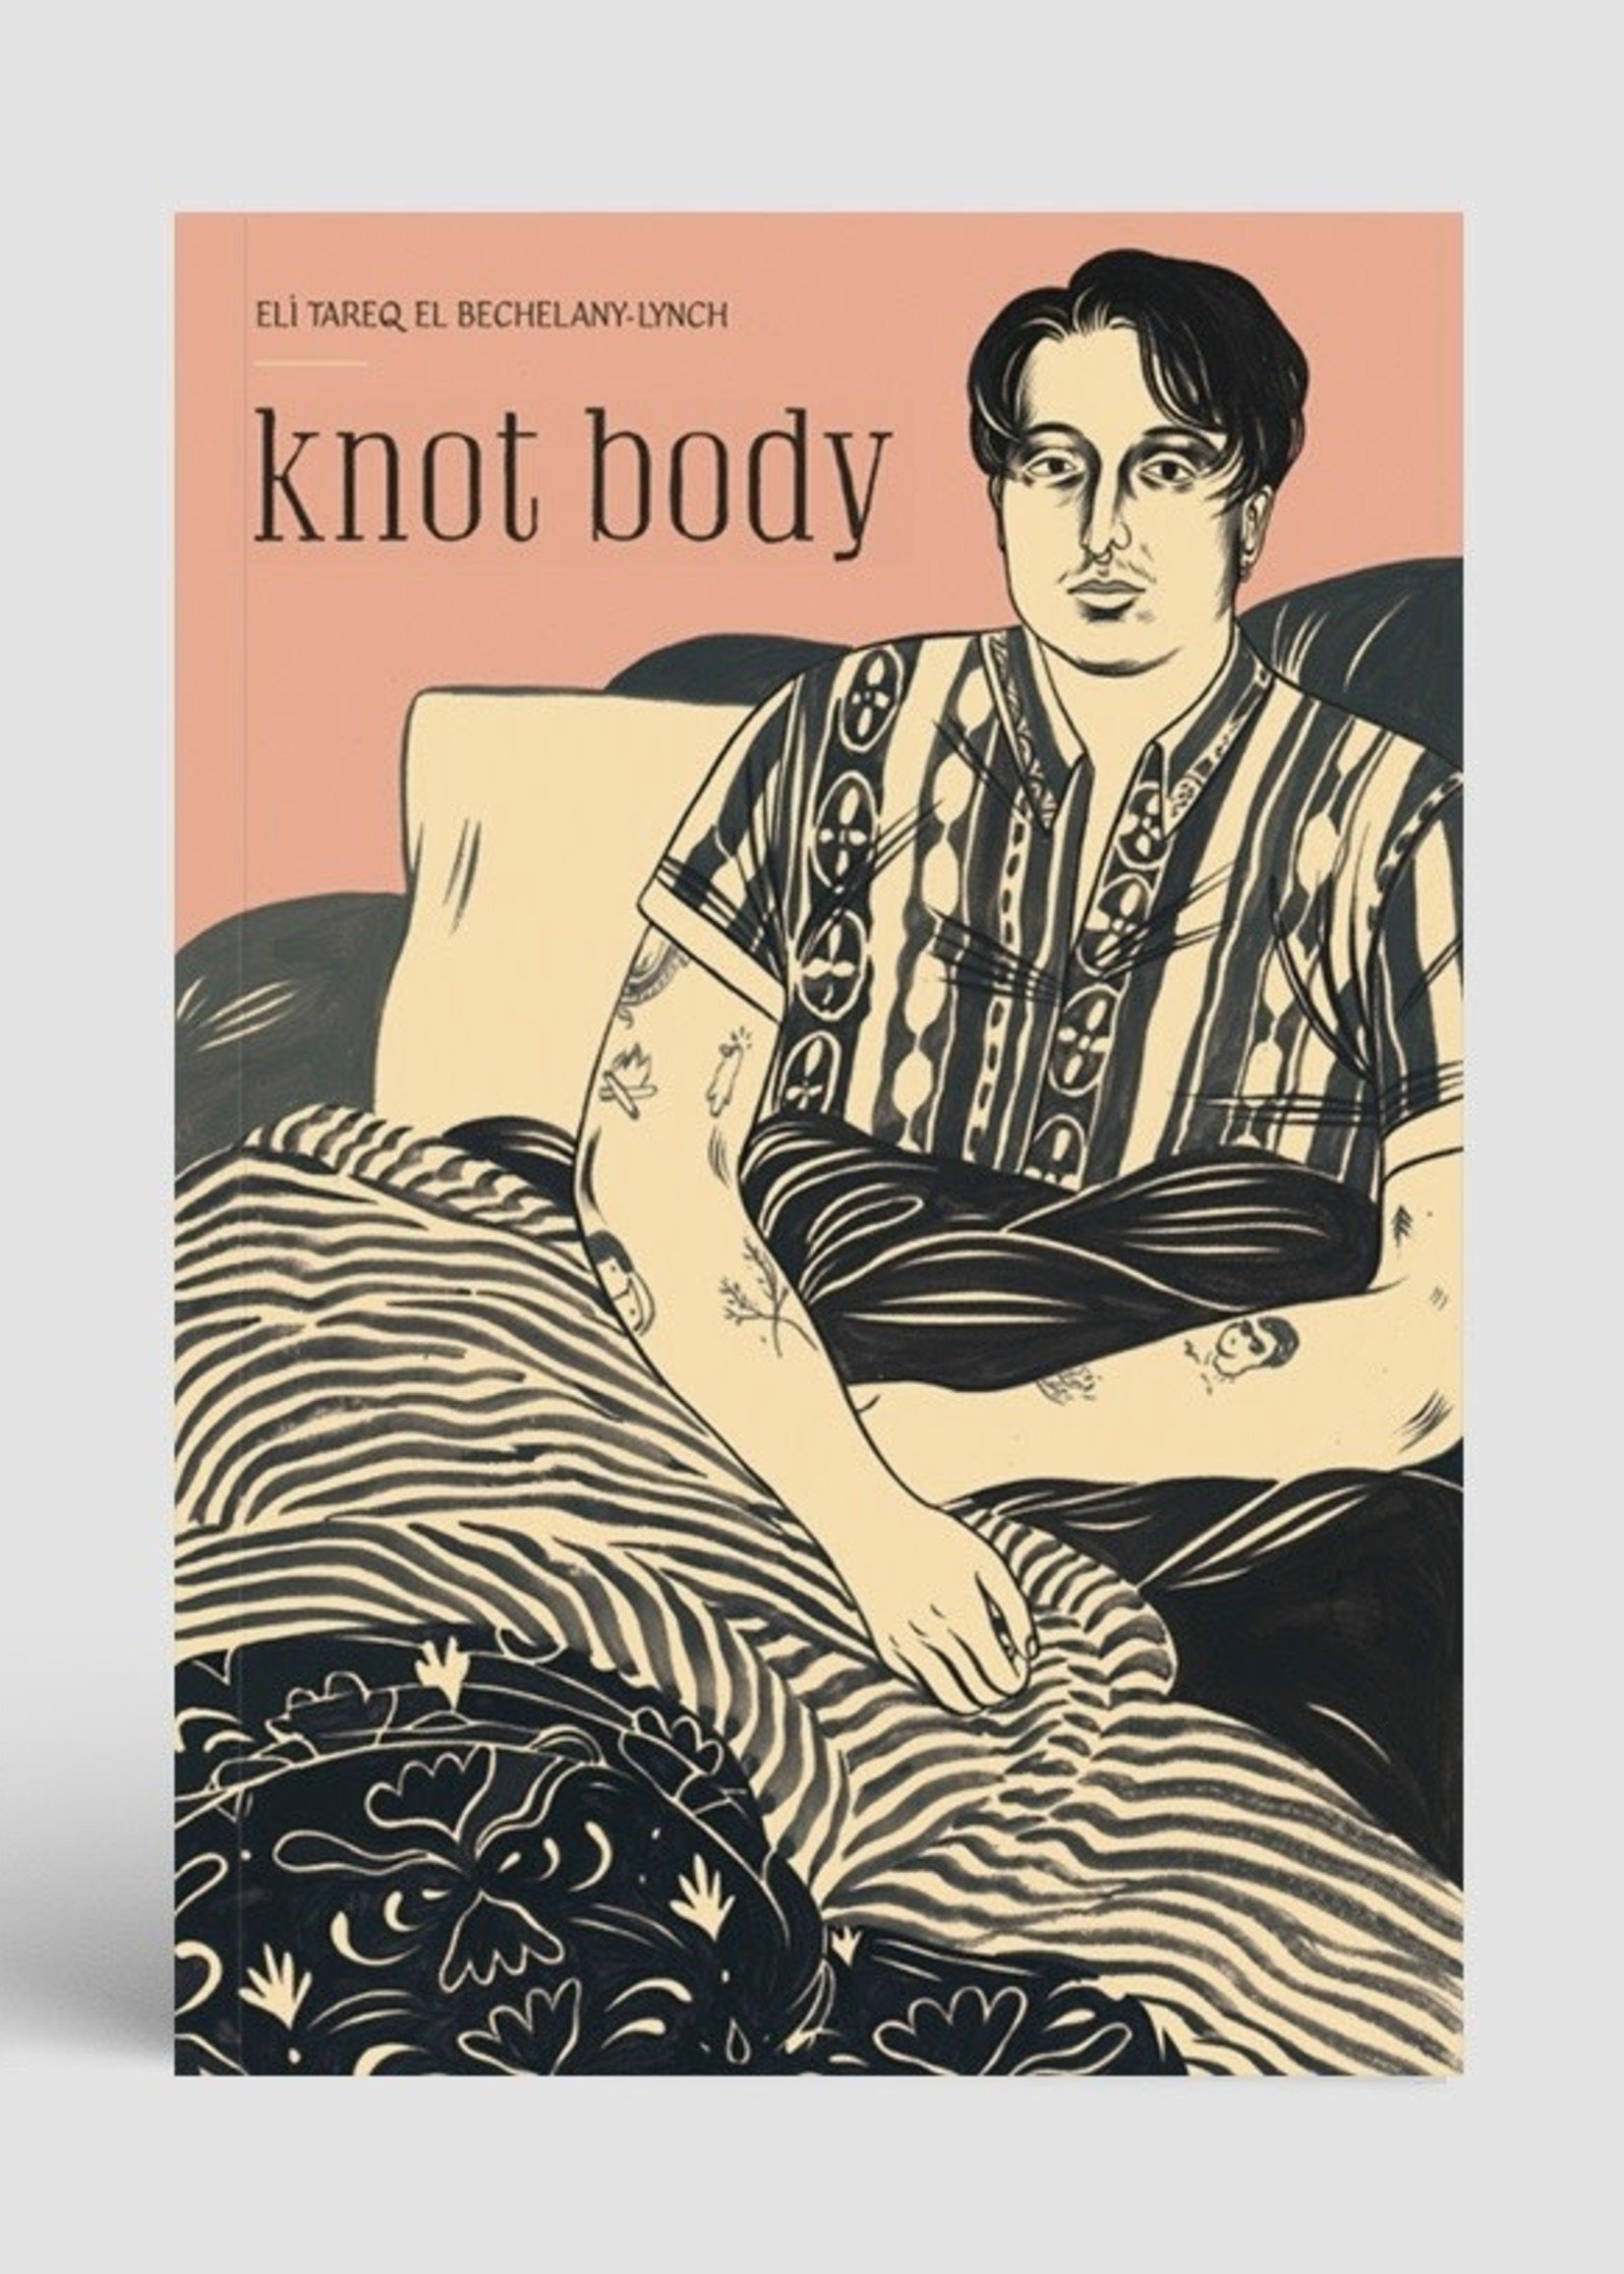 Metatron Press "knot body" by Eli Tareq El Bechelany-Lynch, published by Metatron Press